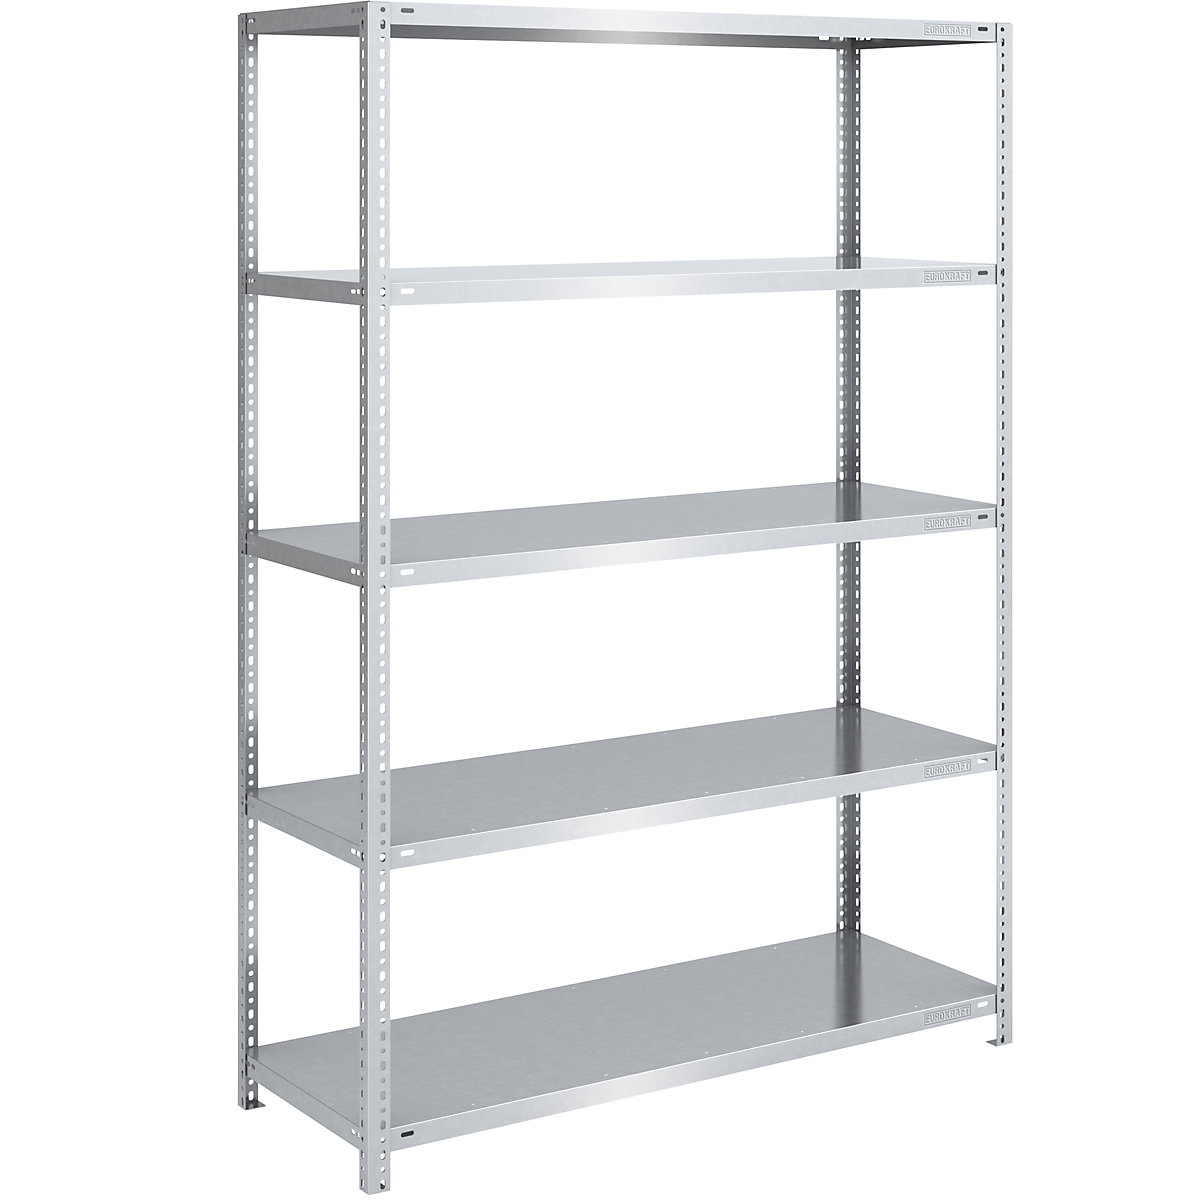 Bolt-together shelf unit, light duty, zinc plated – eurokraft pro, shelf unit height 2000 mm, shelf width 1300 mm, depth 600 mm, standard shelf unit-7